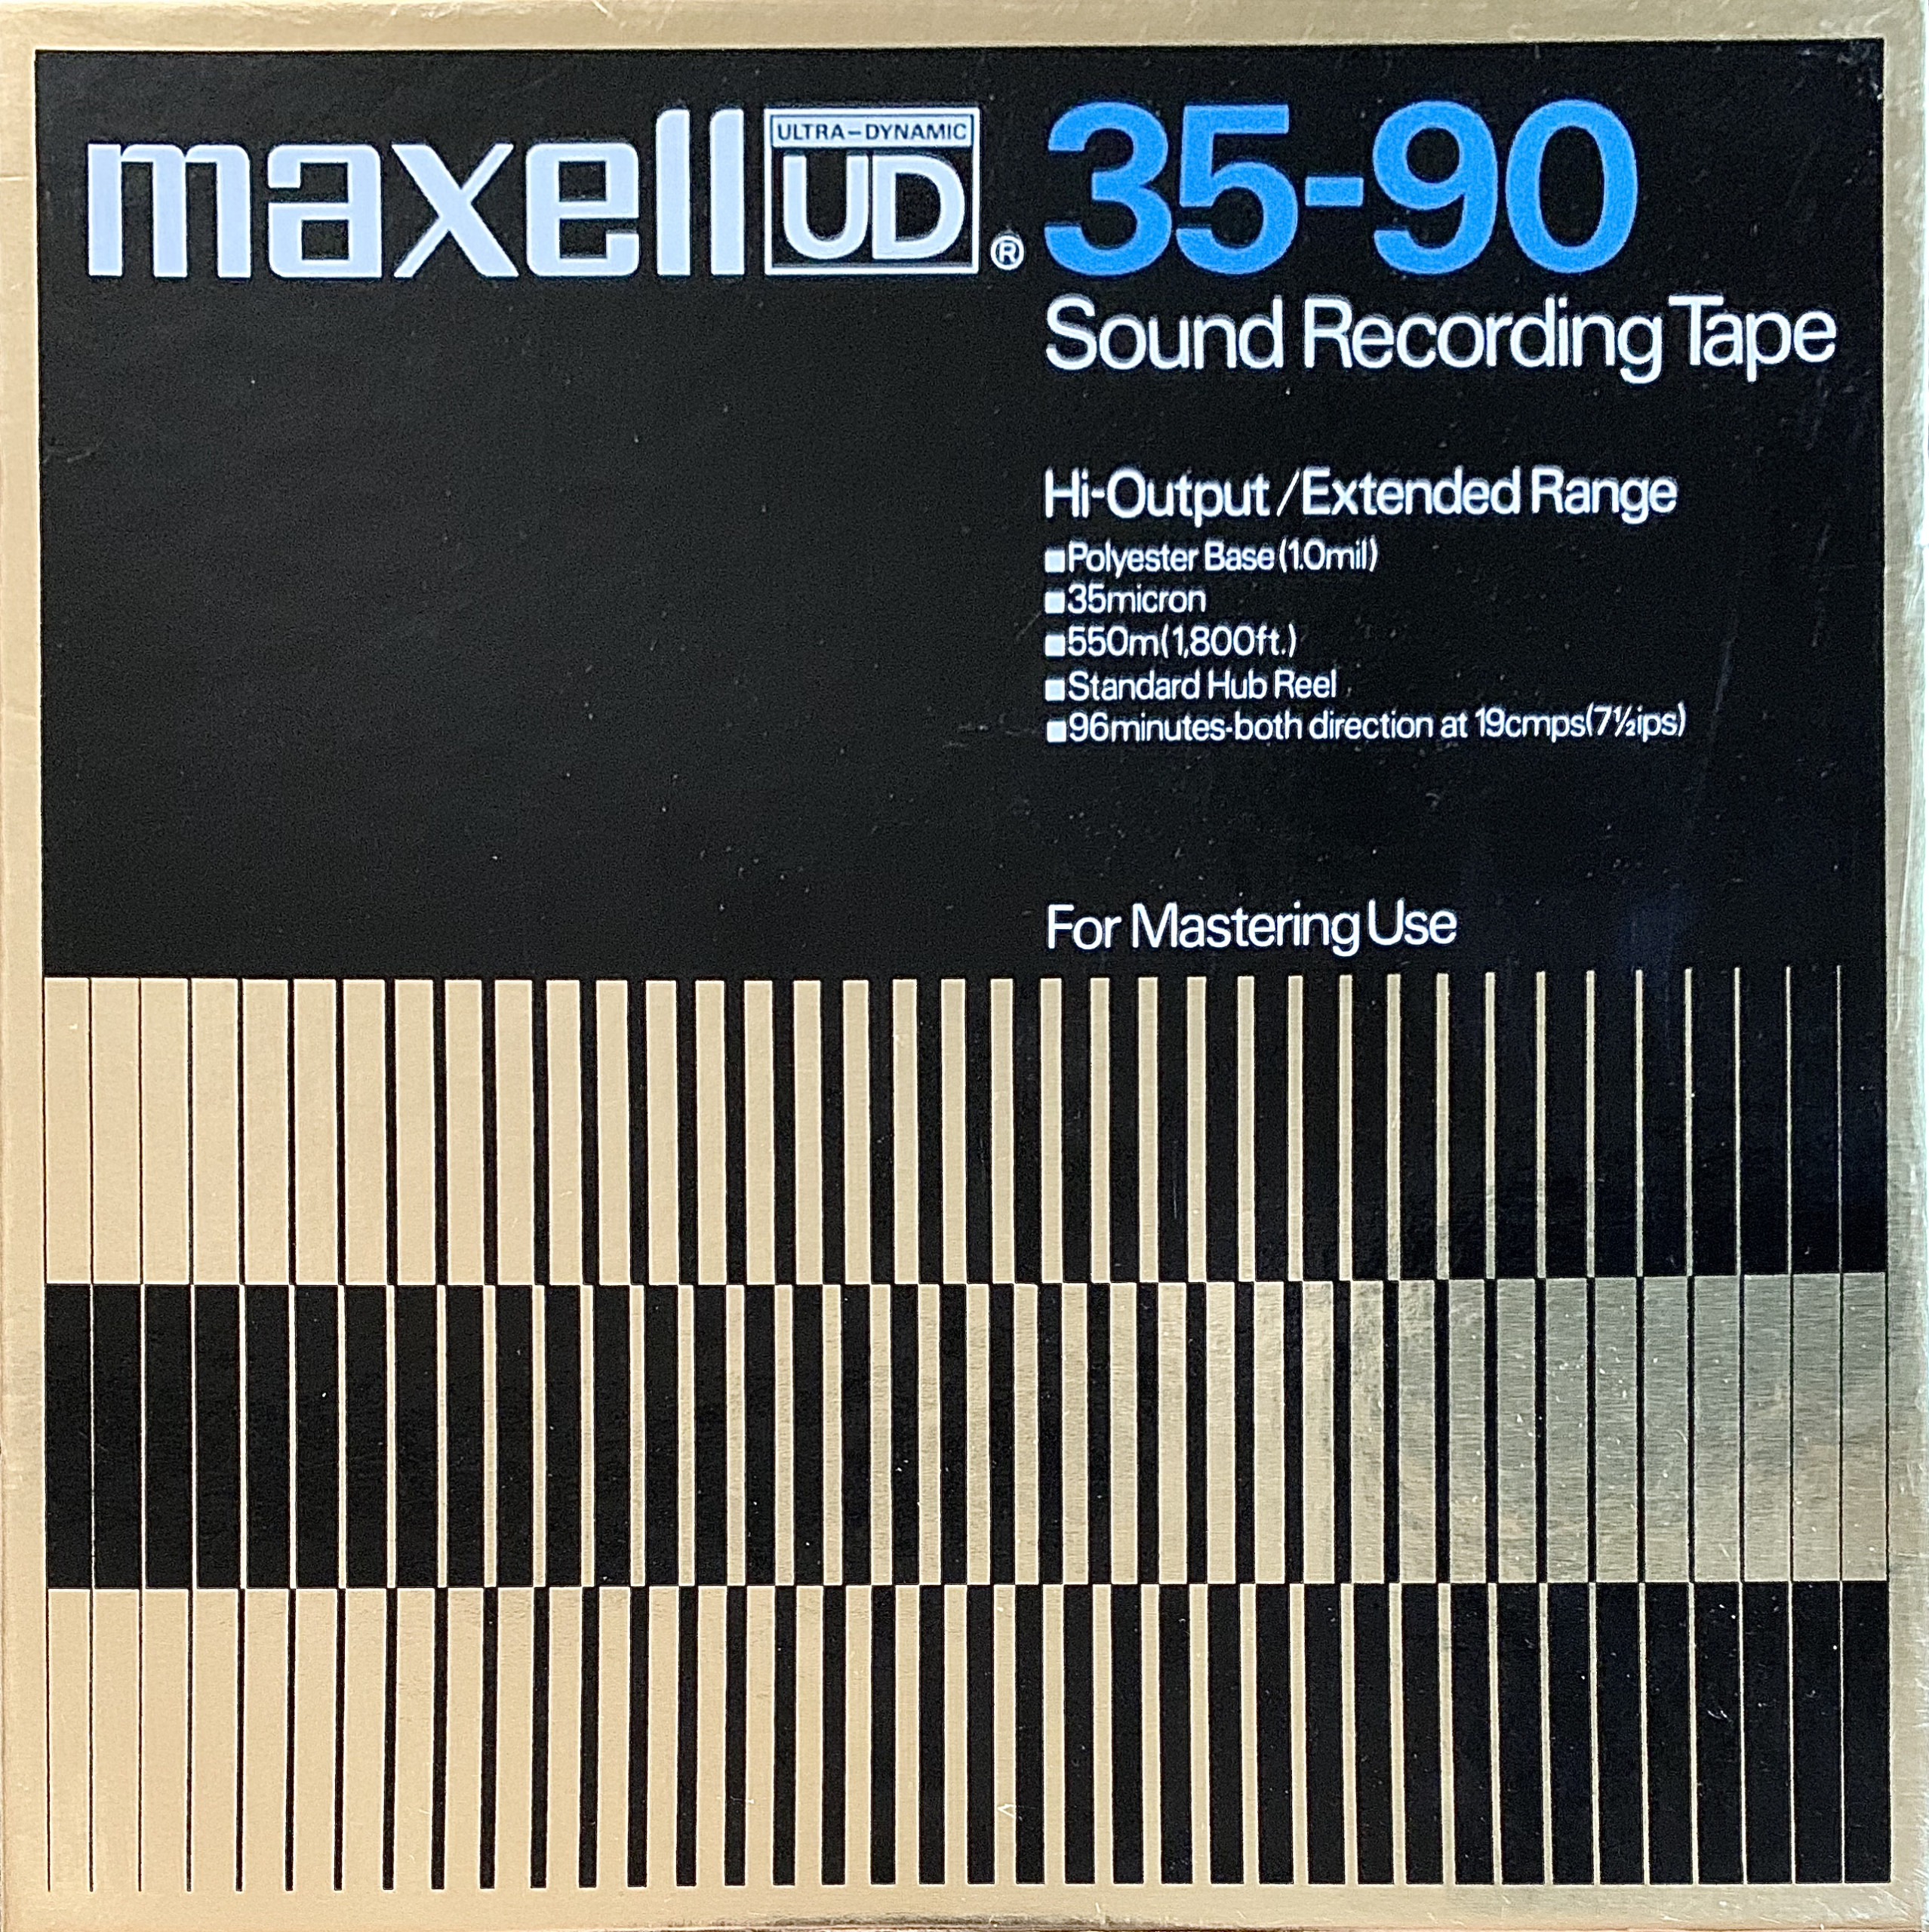 https://reeltoreelwarehouse.com/wp-content/uploads/2020/09/Maxell-UD-35-90-Reel-Tape-Box-scaled.jpg